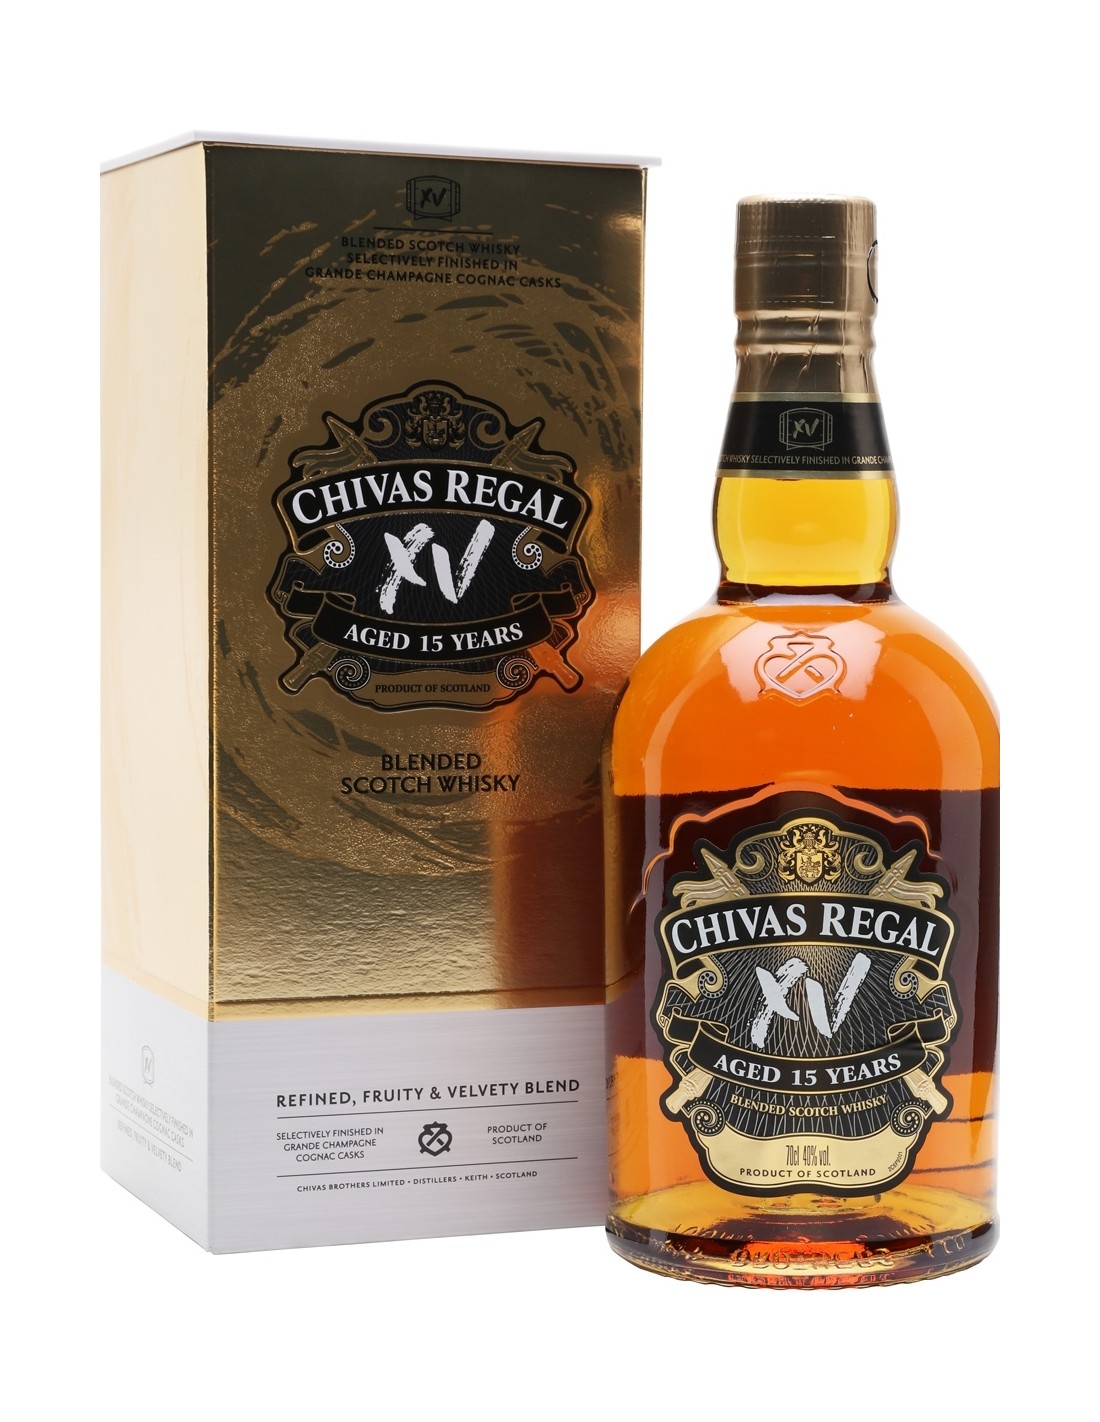 Whisky Chivas Regal, 0.7L, 15 ani, 40% alc., Scotia alcooldiscount.ro